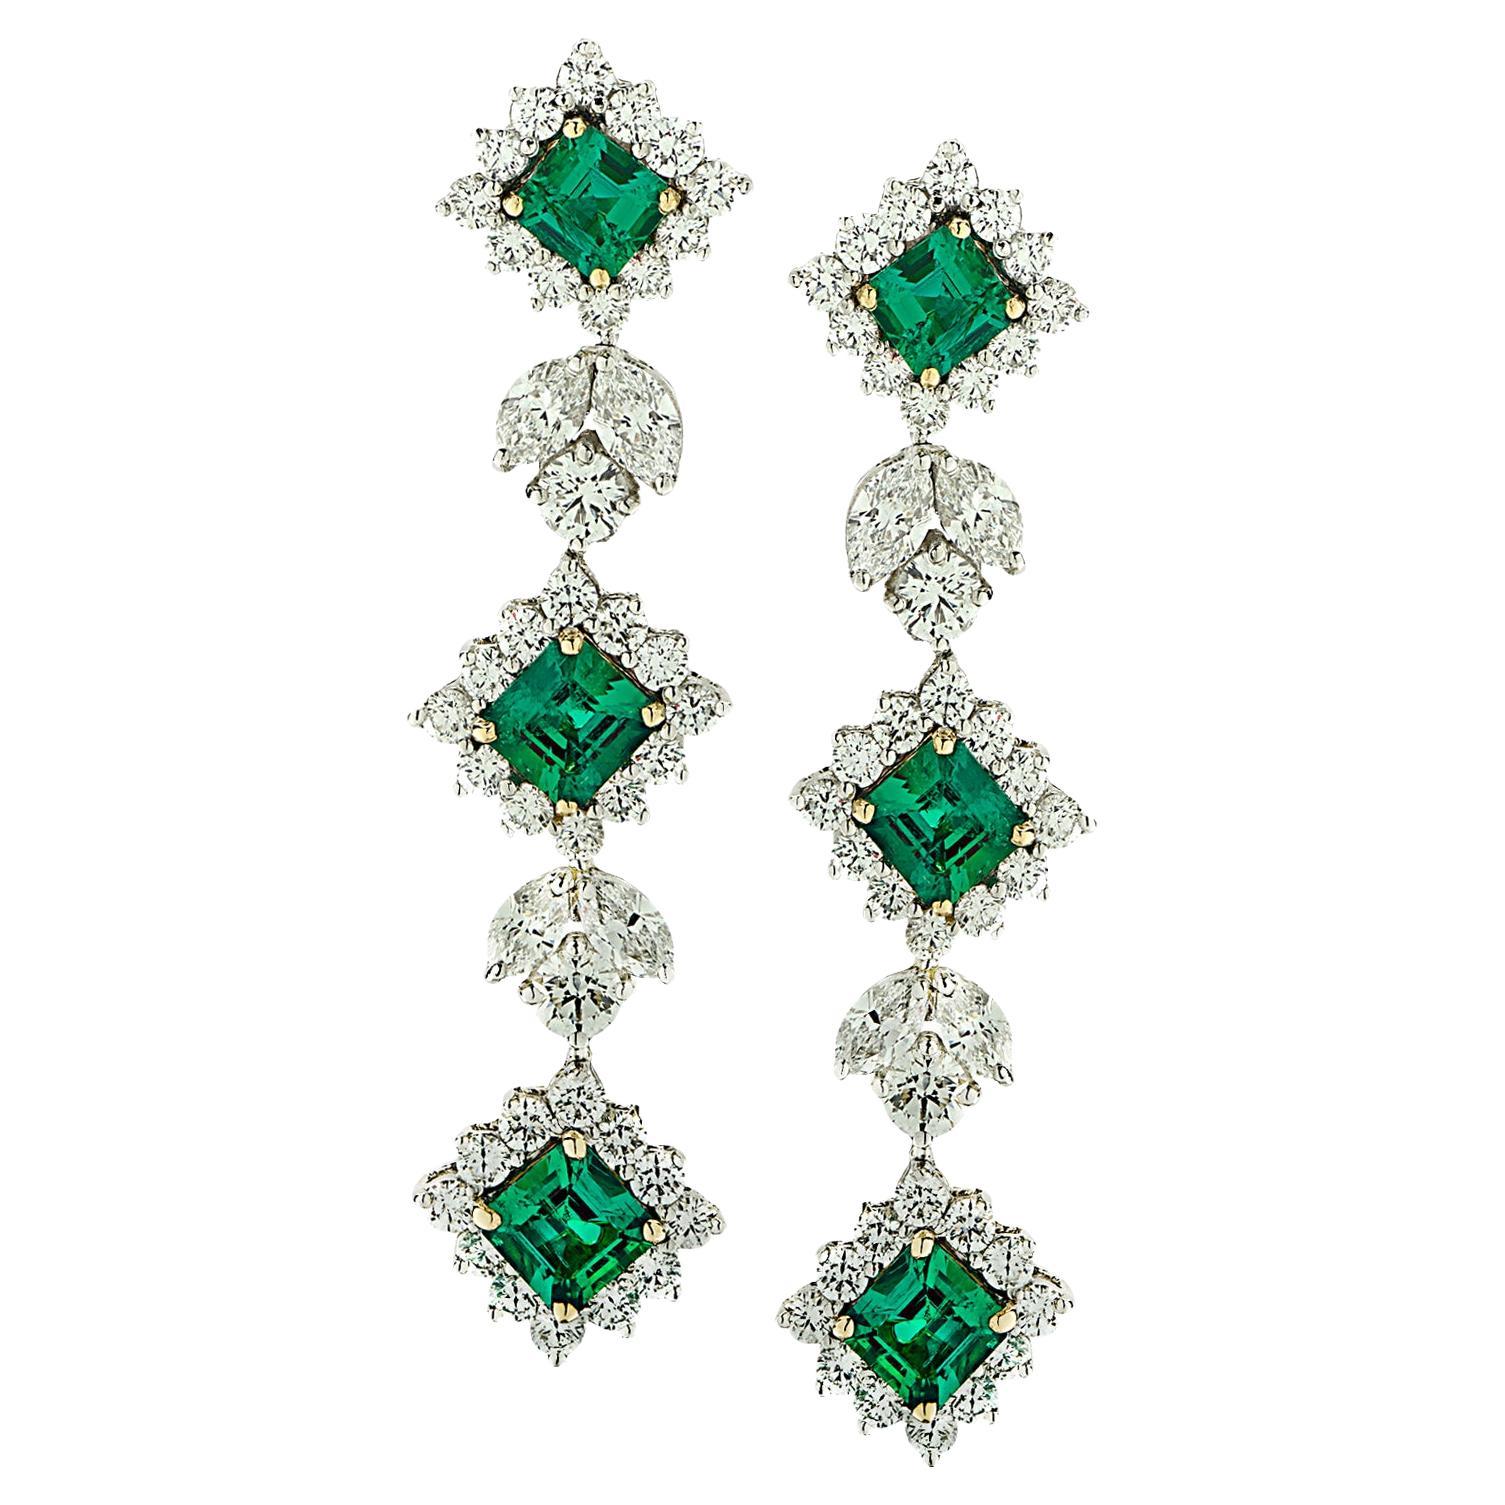 Vivid Diamonds Emerald and Diamond Dangle Earrings